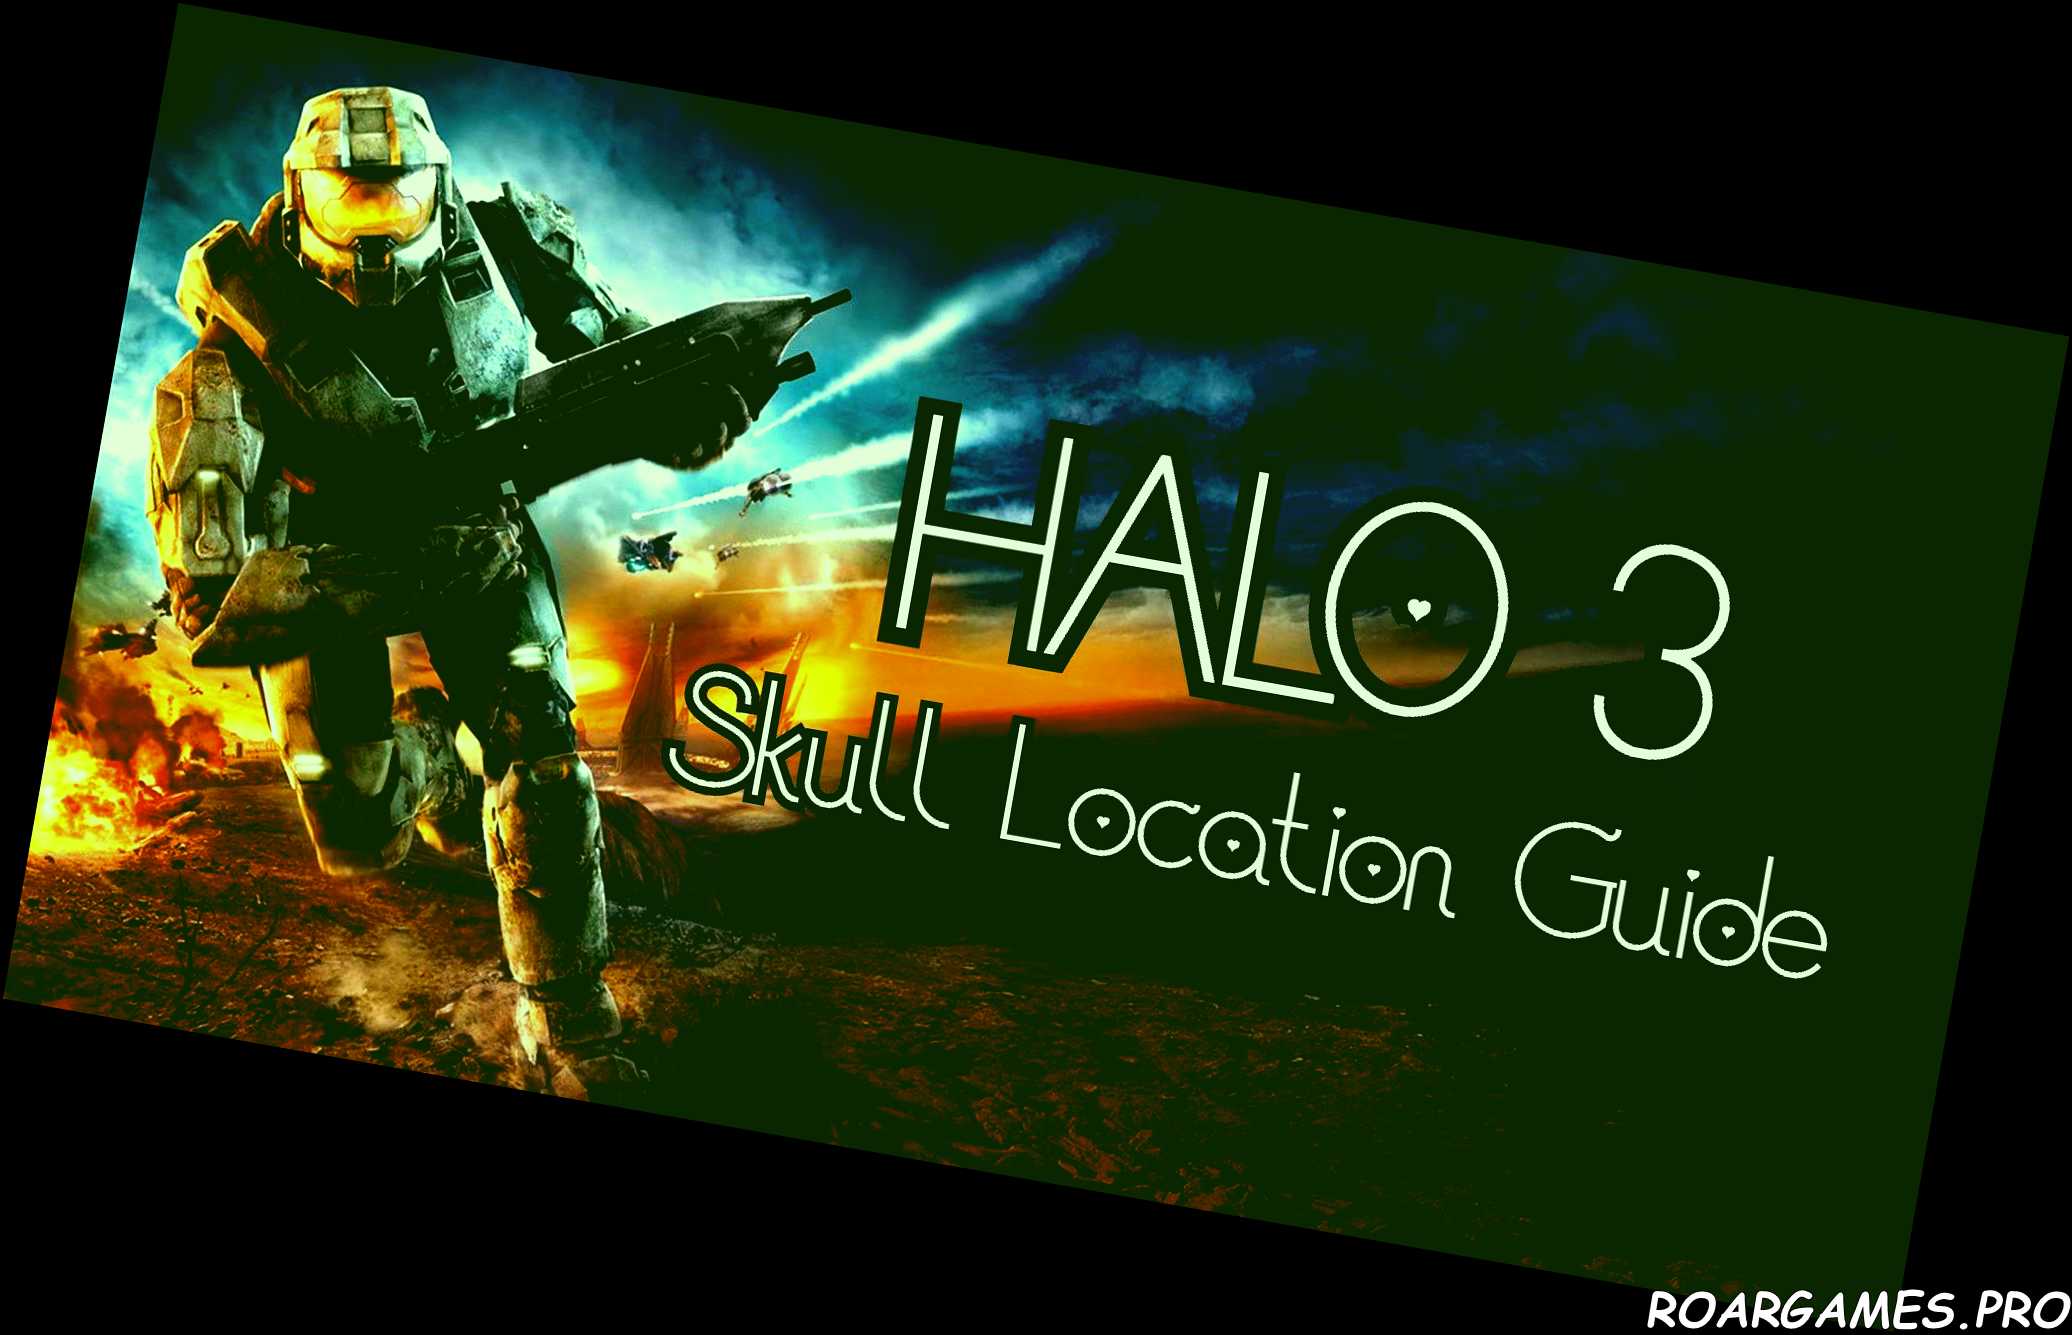 Halo 3 Skull Location Guide